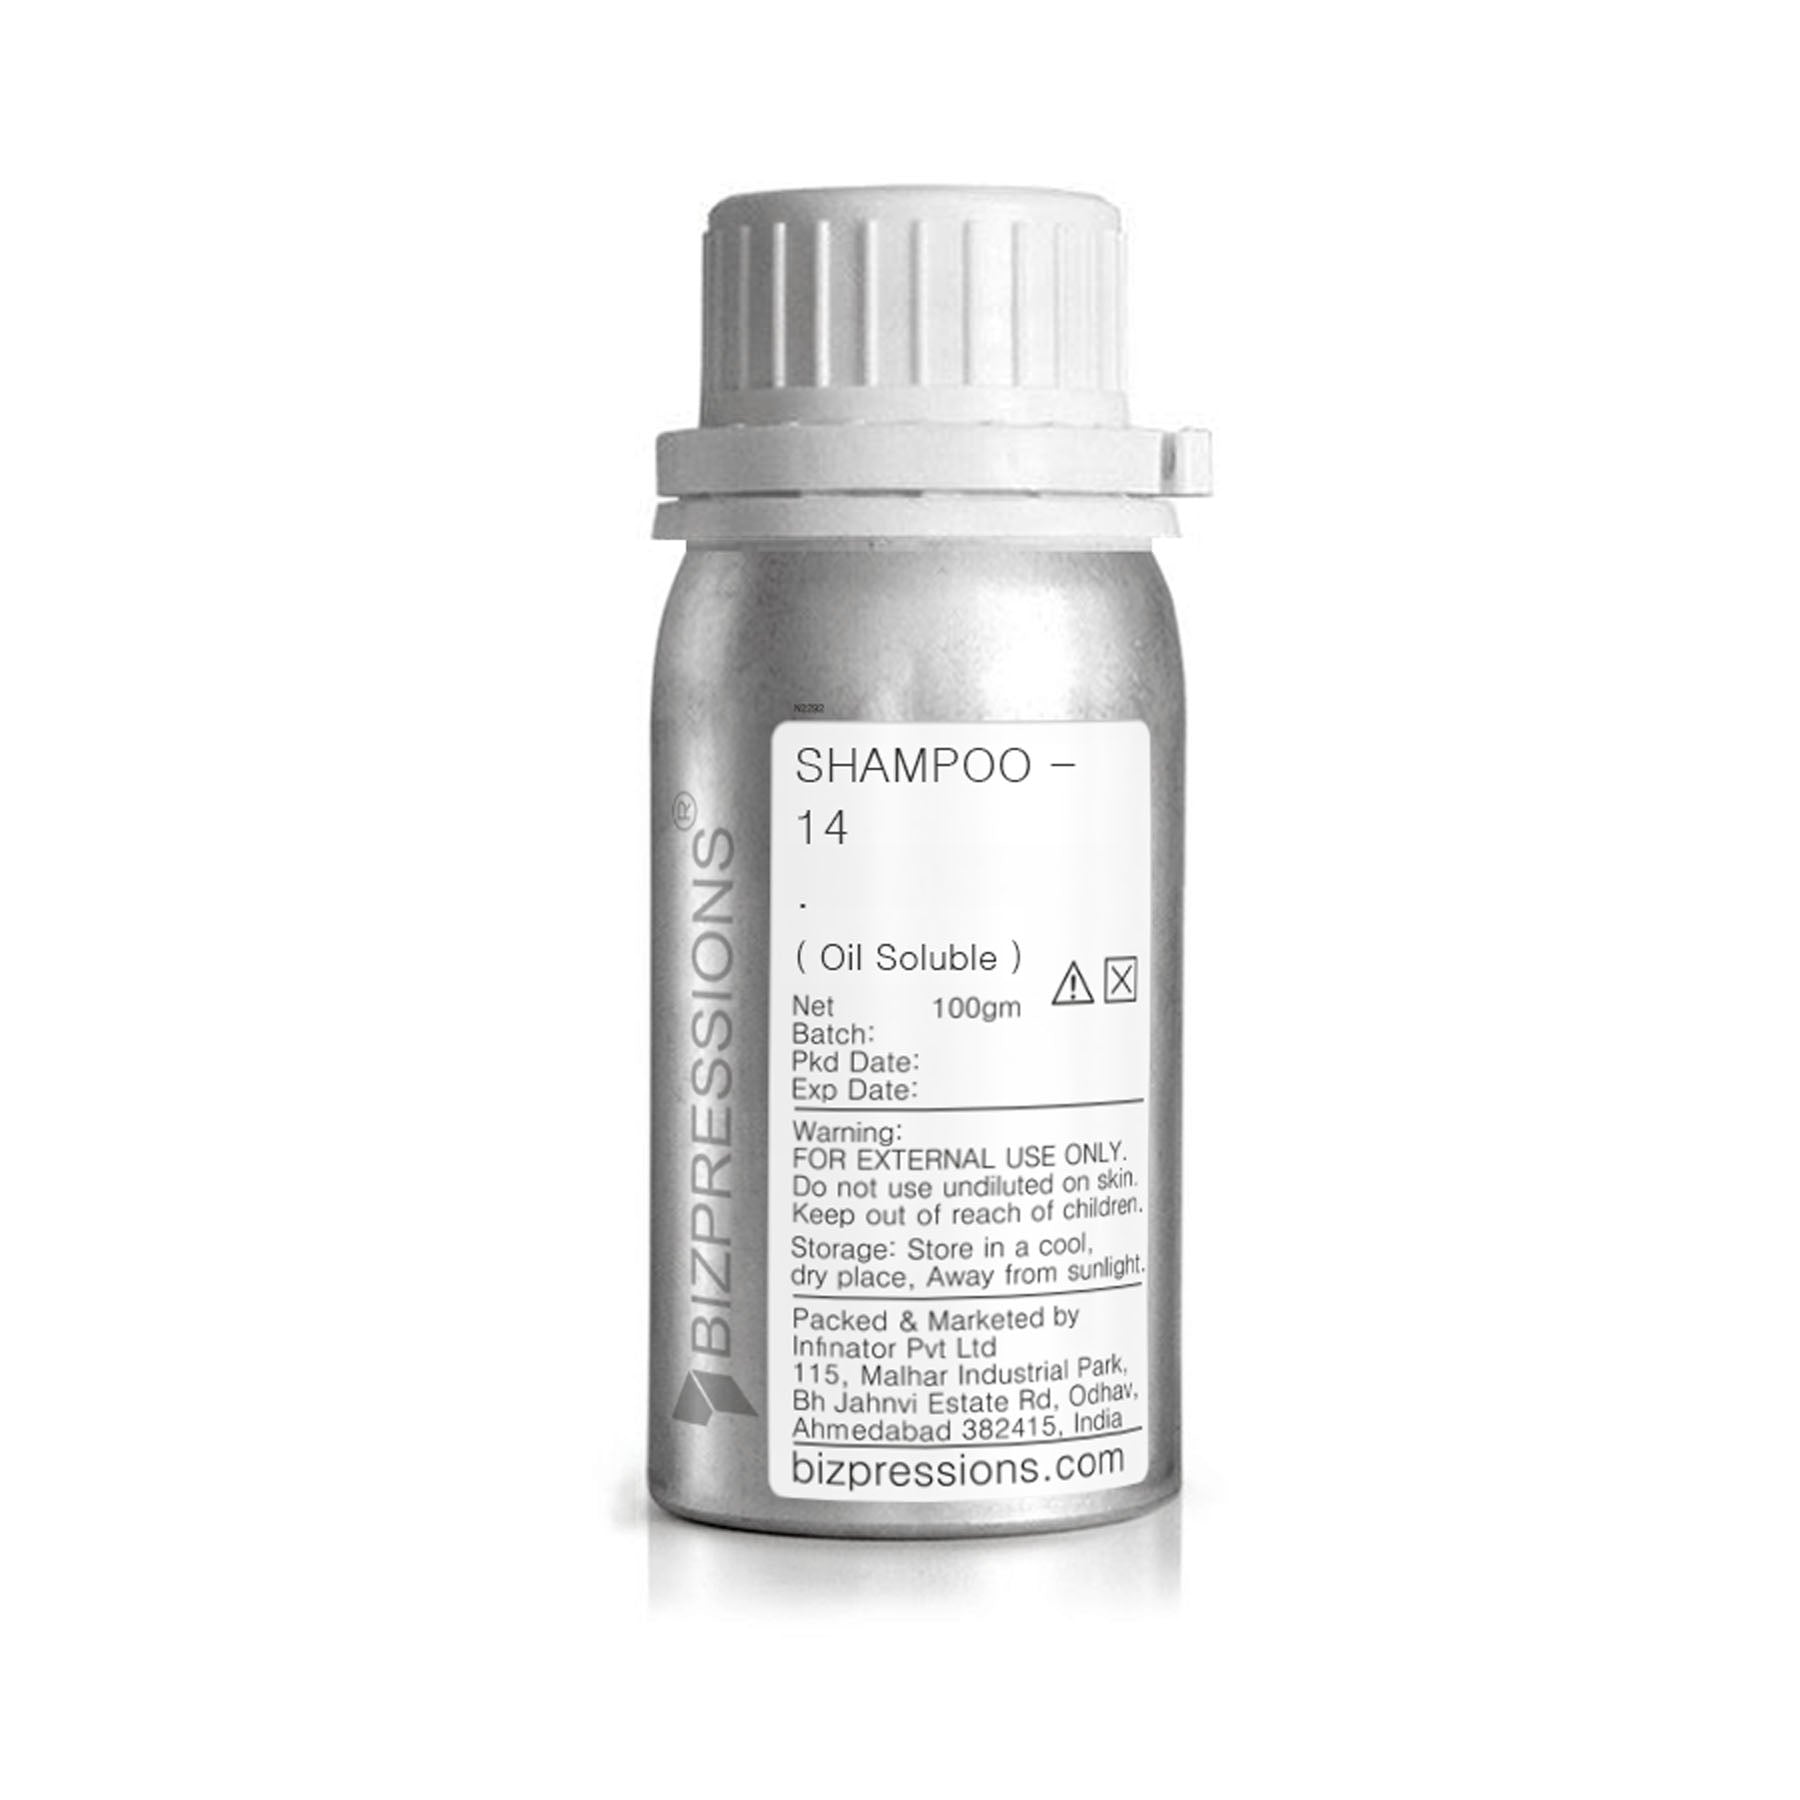 SHAMPOO - 14 - Fragrance ( Oil Soluble ) - 100 gm